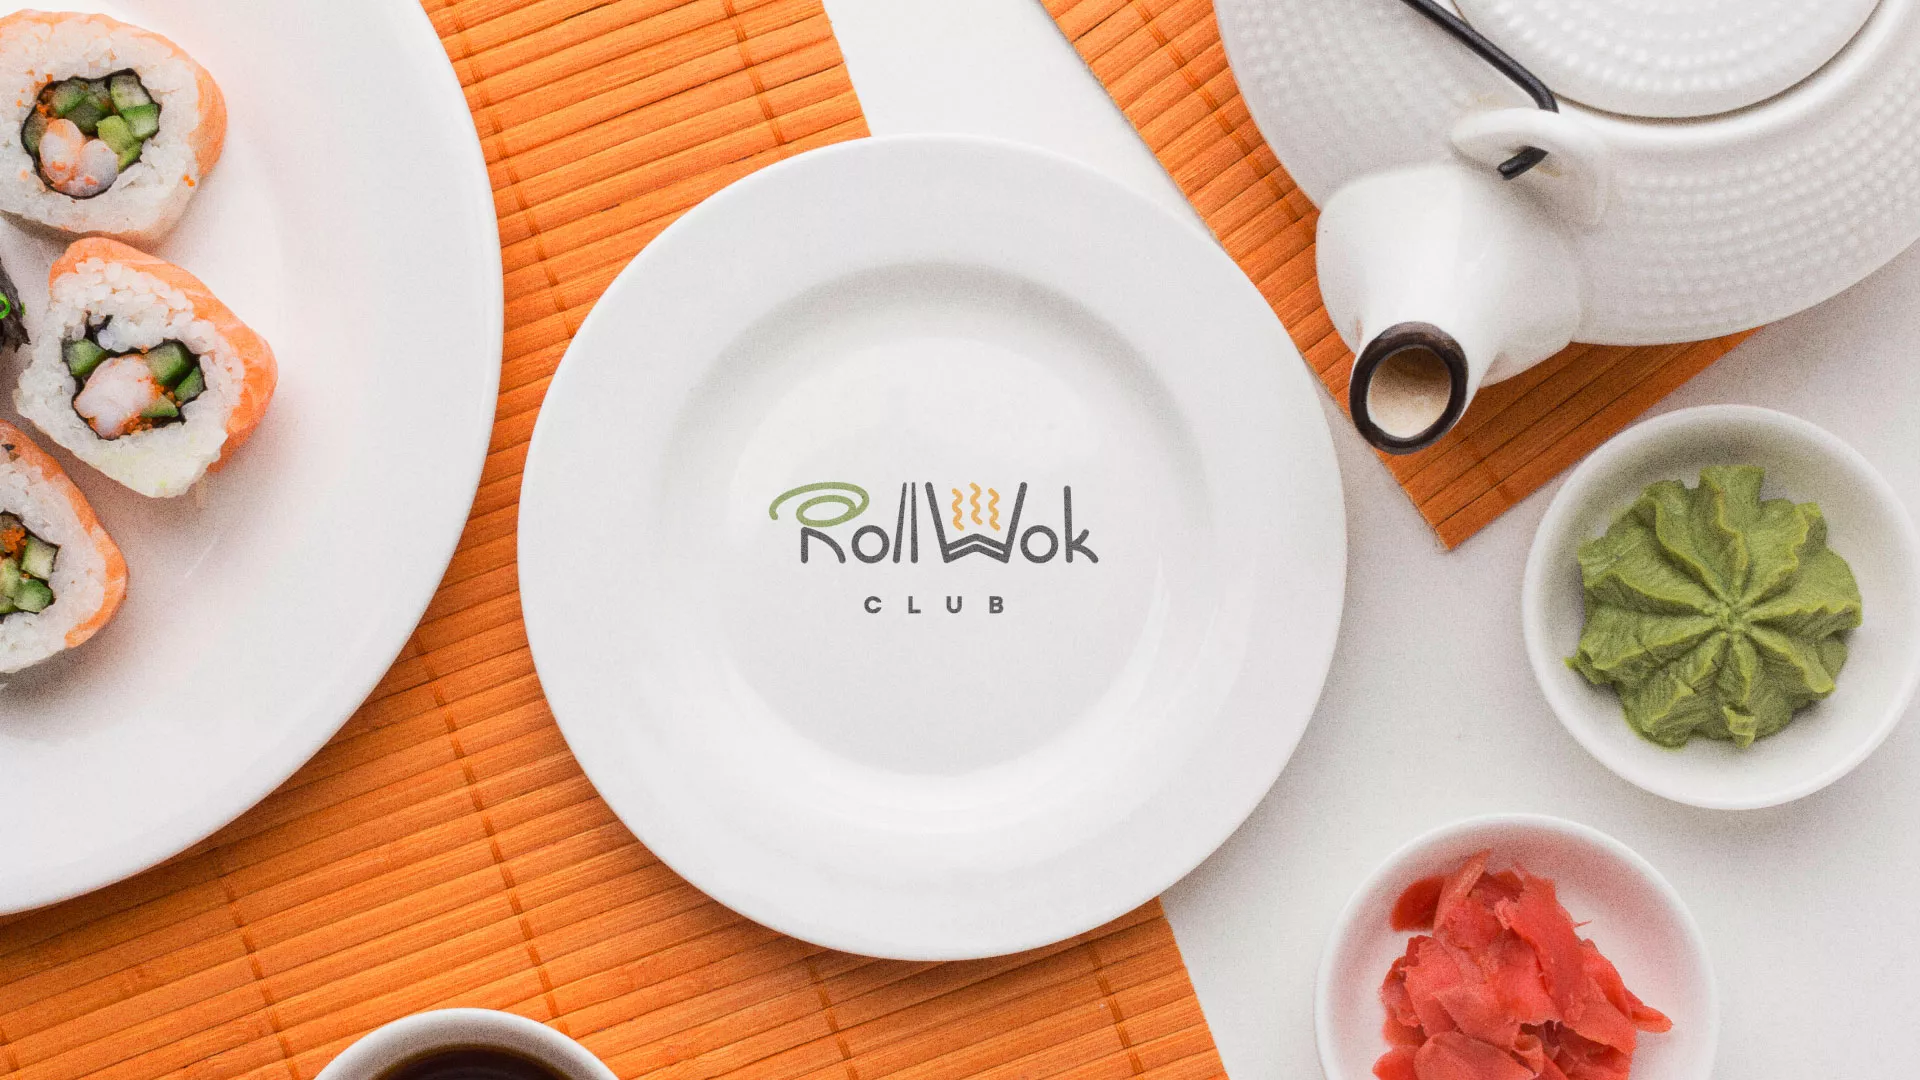 Разработка логотипа и фирменного стиля суши-бара «Roll Wok Club» в Ростове